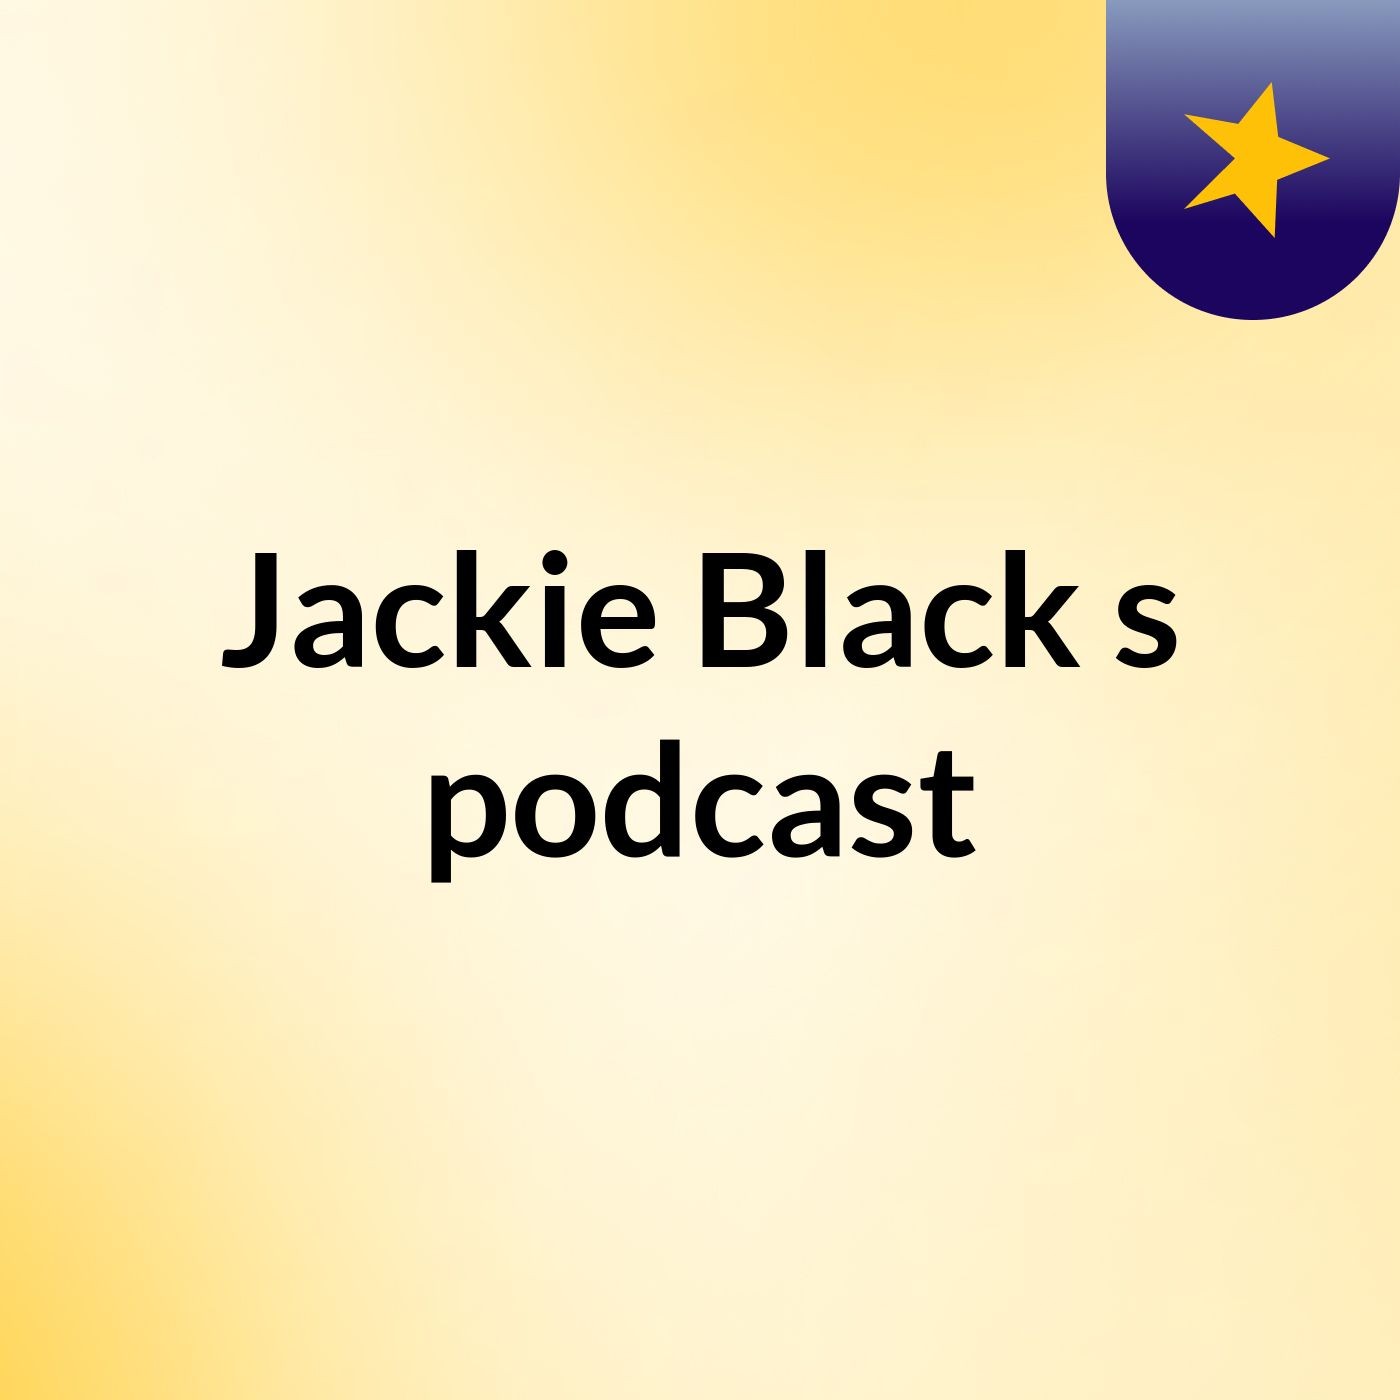 Jackie Black's podcast